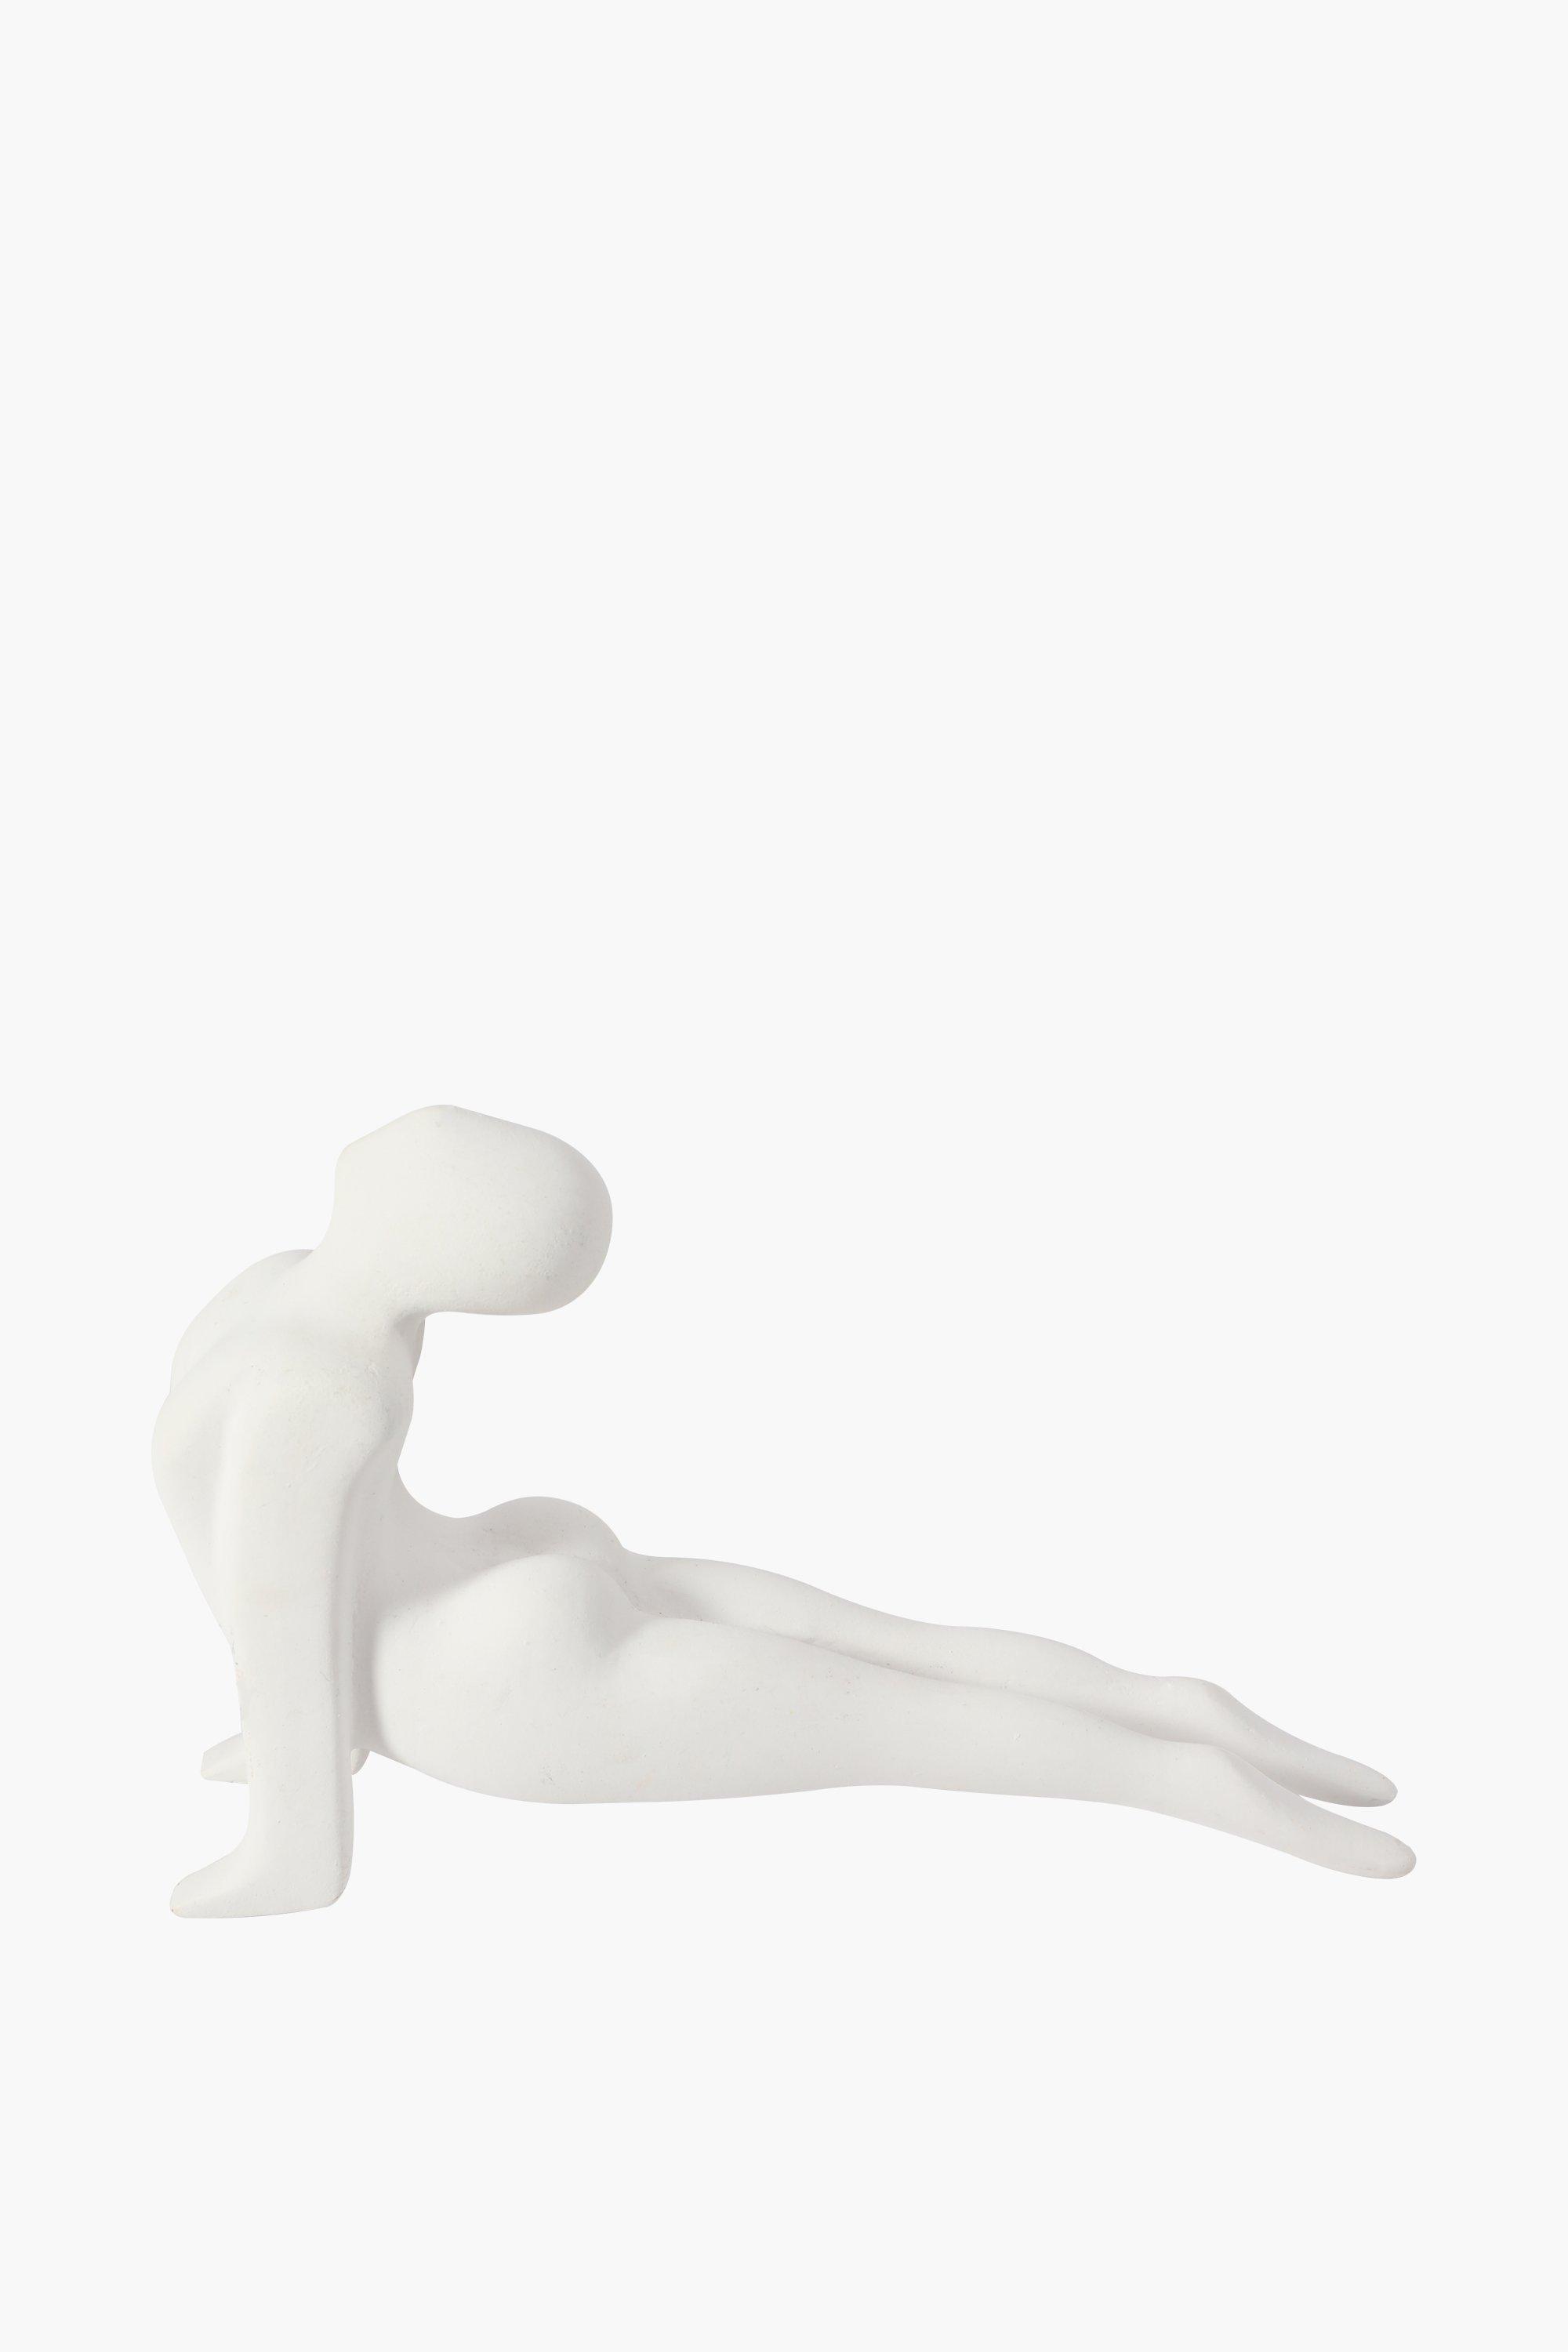 BNF 3Pcs Yoga Pose Statue Figurine Housewarming Indoor Yoga Figure